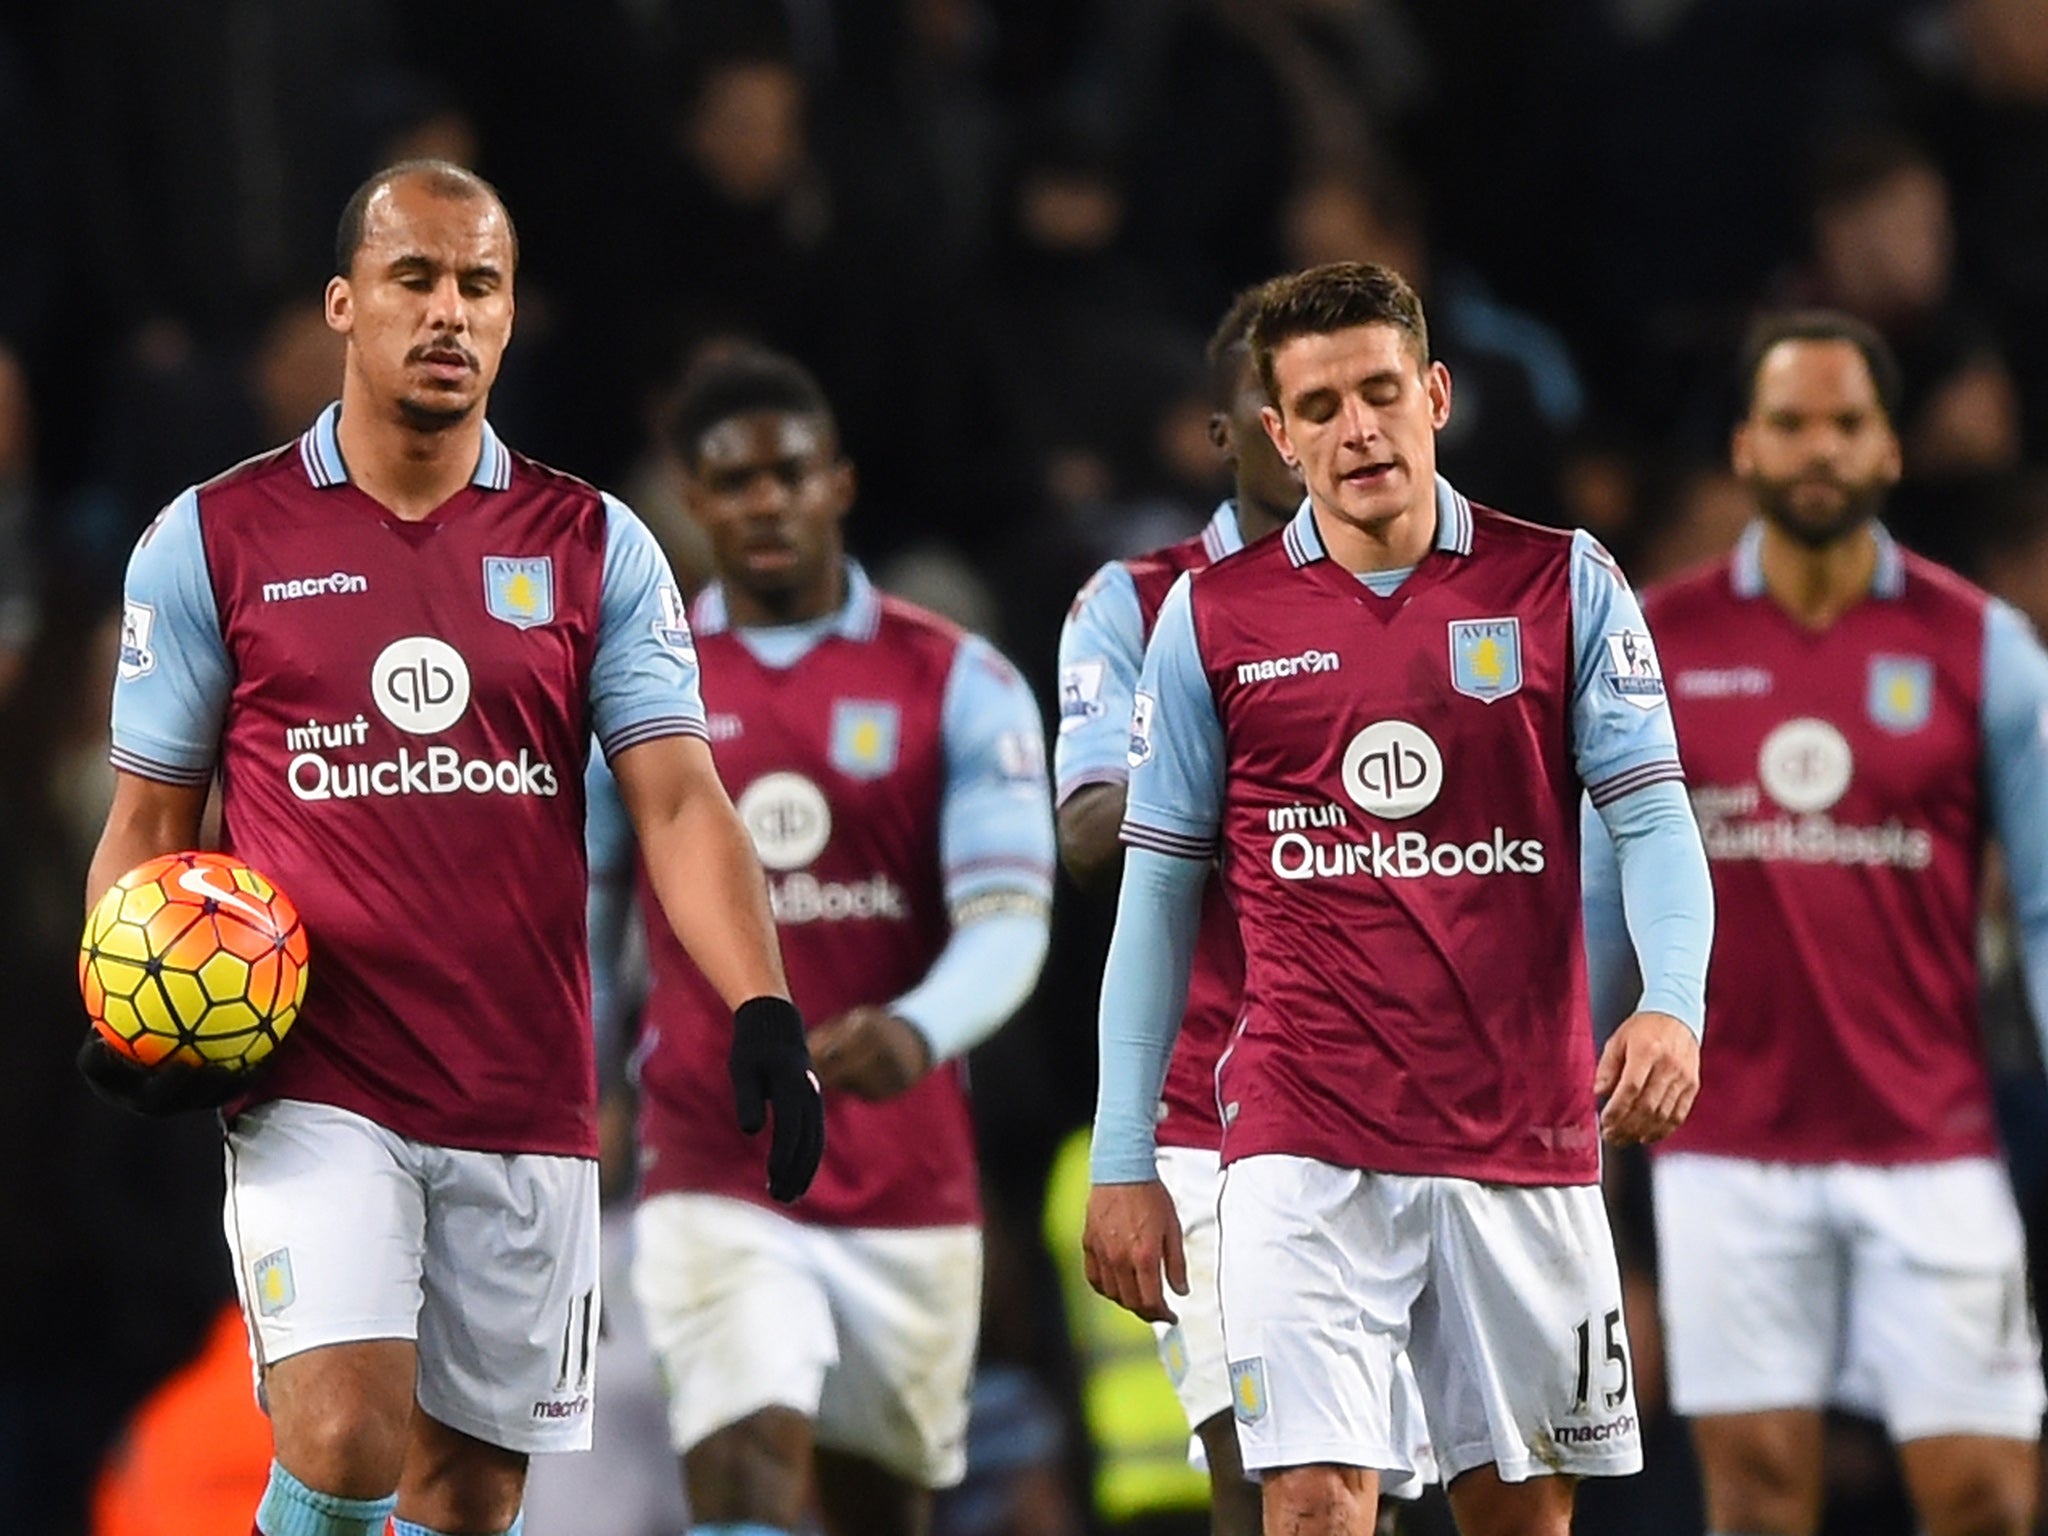 Villa Park turned on Aston Villa's players once again